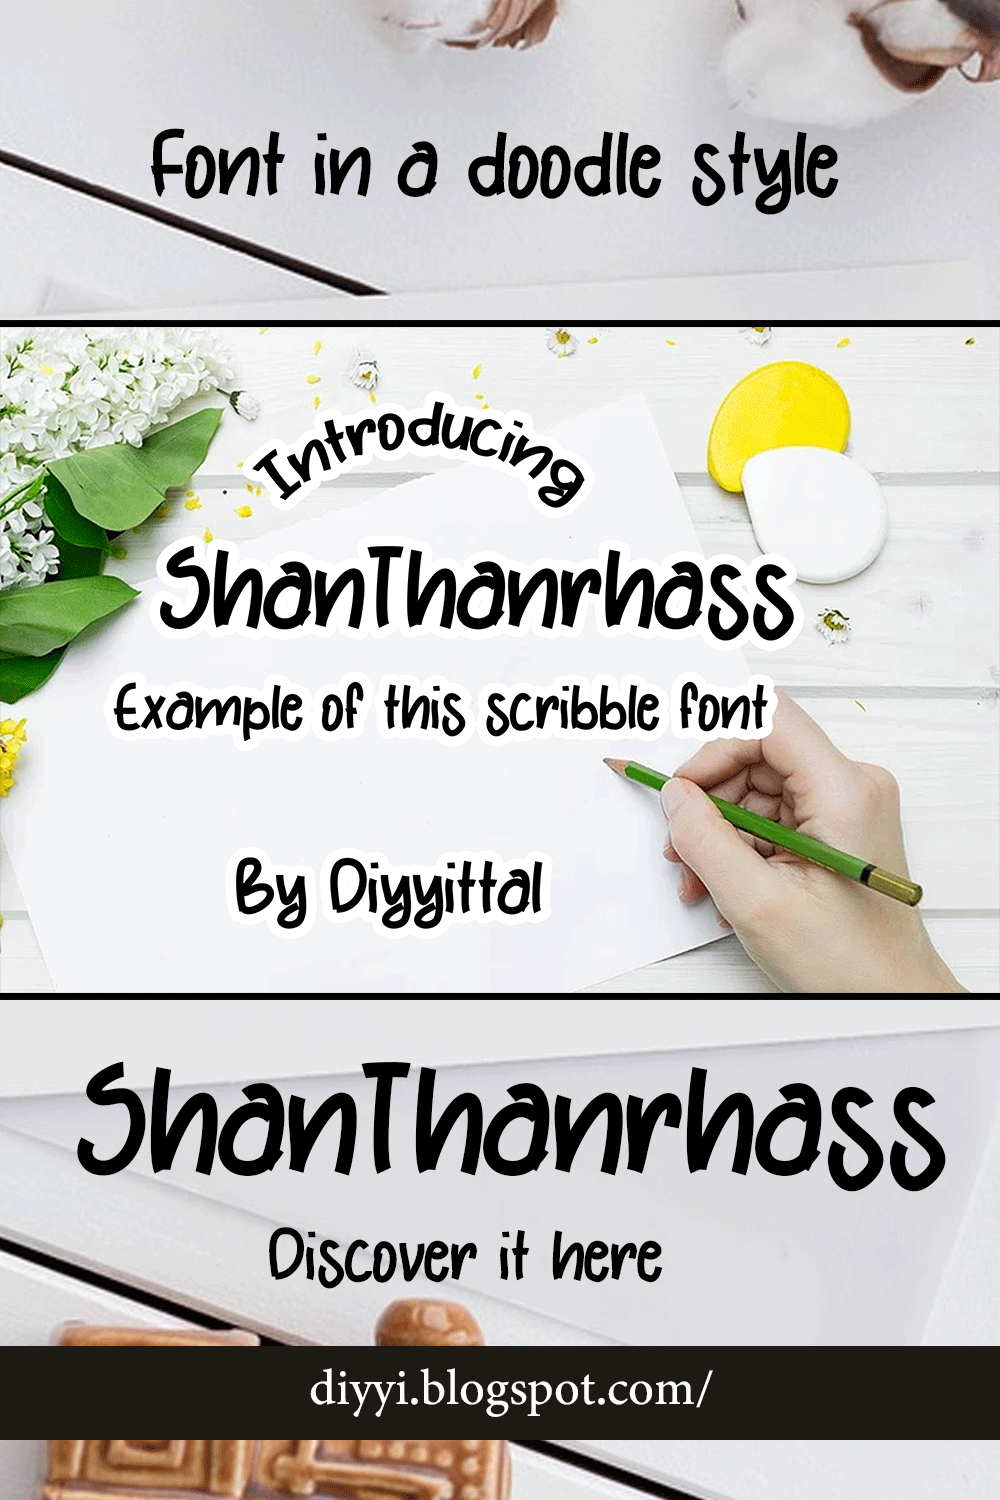 ShanThanrhass